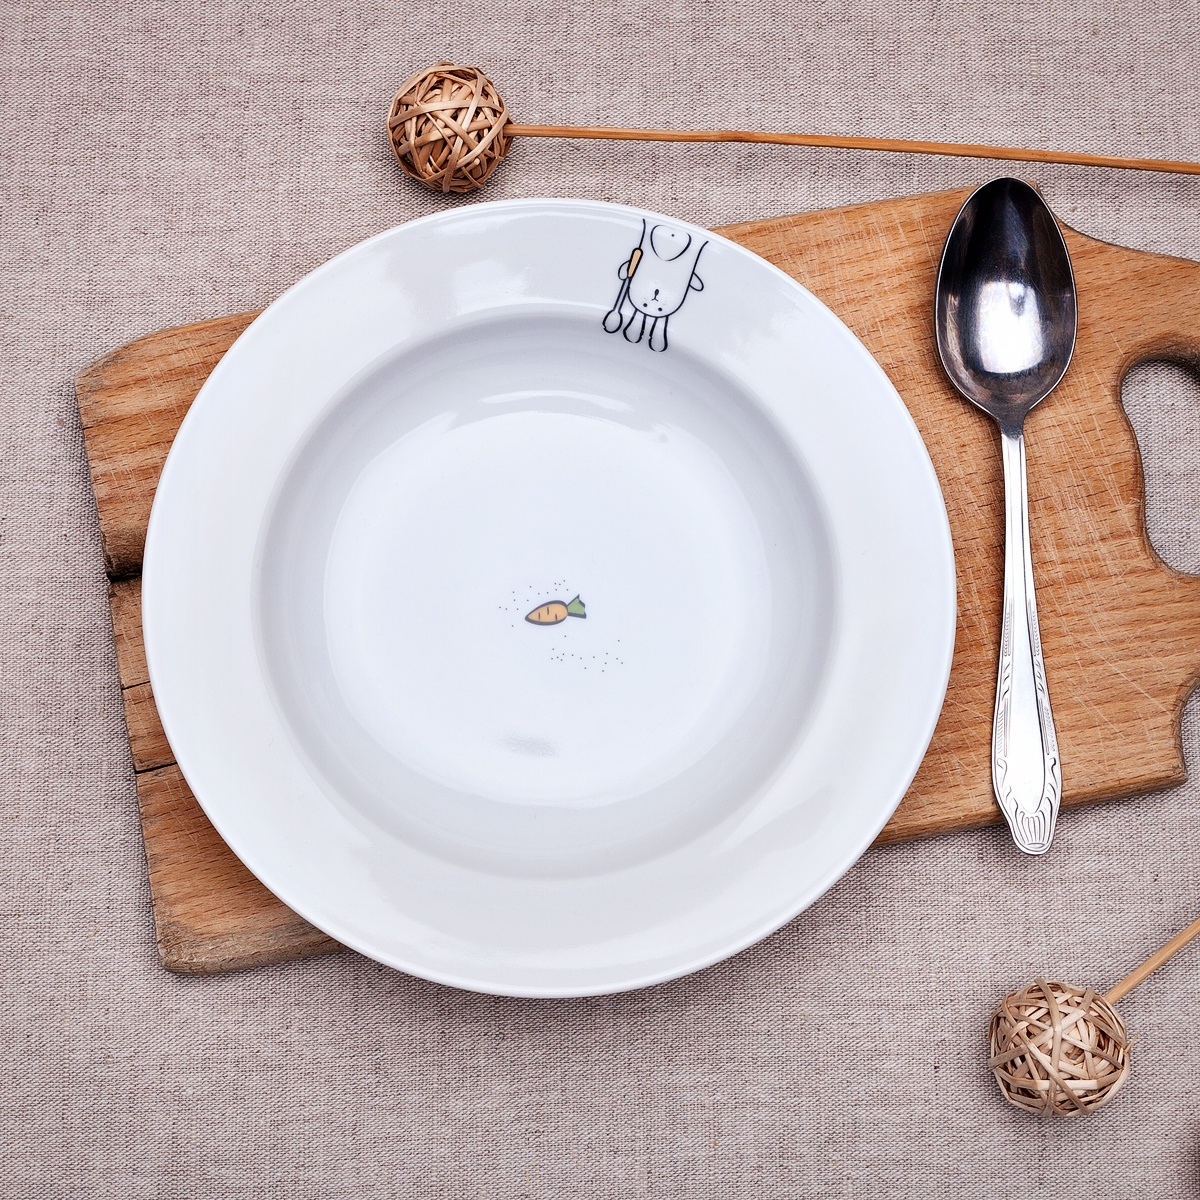 Лишняя тарелка на столе. Тарелка на столе. Тарелка сверху. Пустая тарелка. Пустая тарелка на столе.